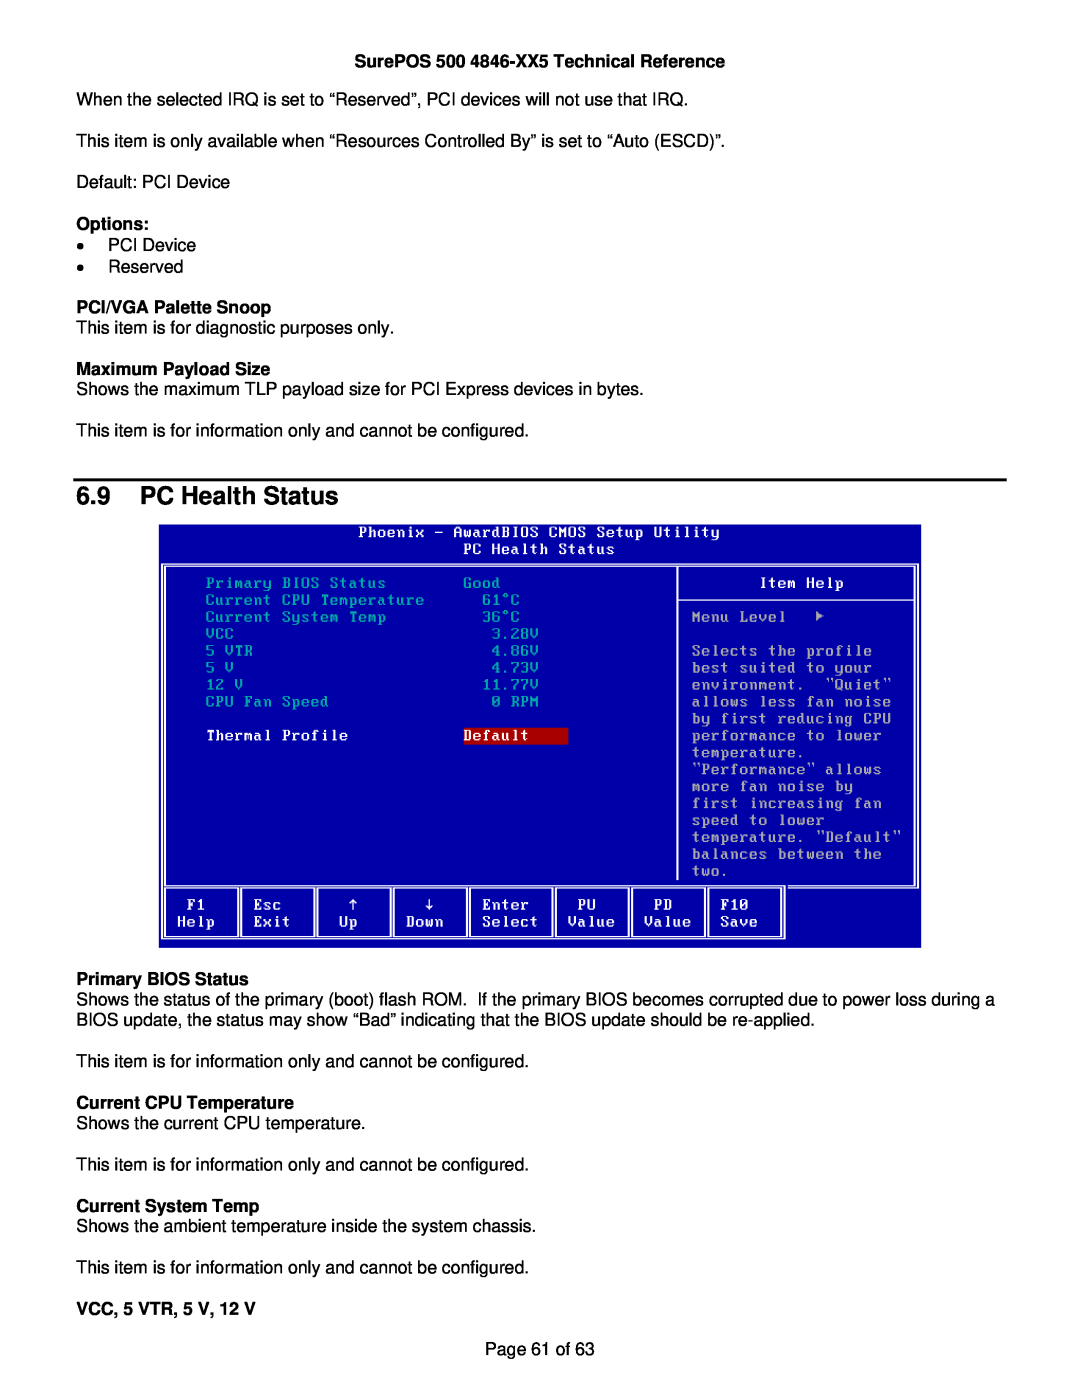 IBM PC Health Status, SurePOS 500 4846-XX5 Technical Reference, Options, PCI/VGA Palette Snoop, Maximum Payload Size 